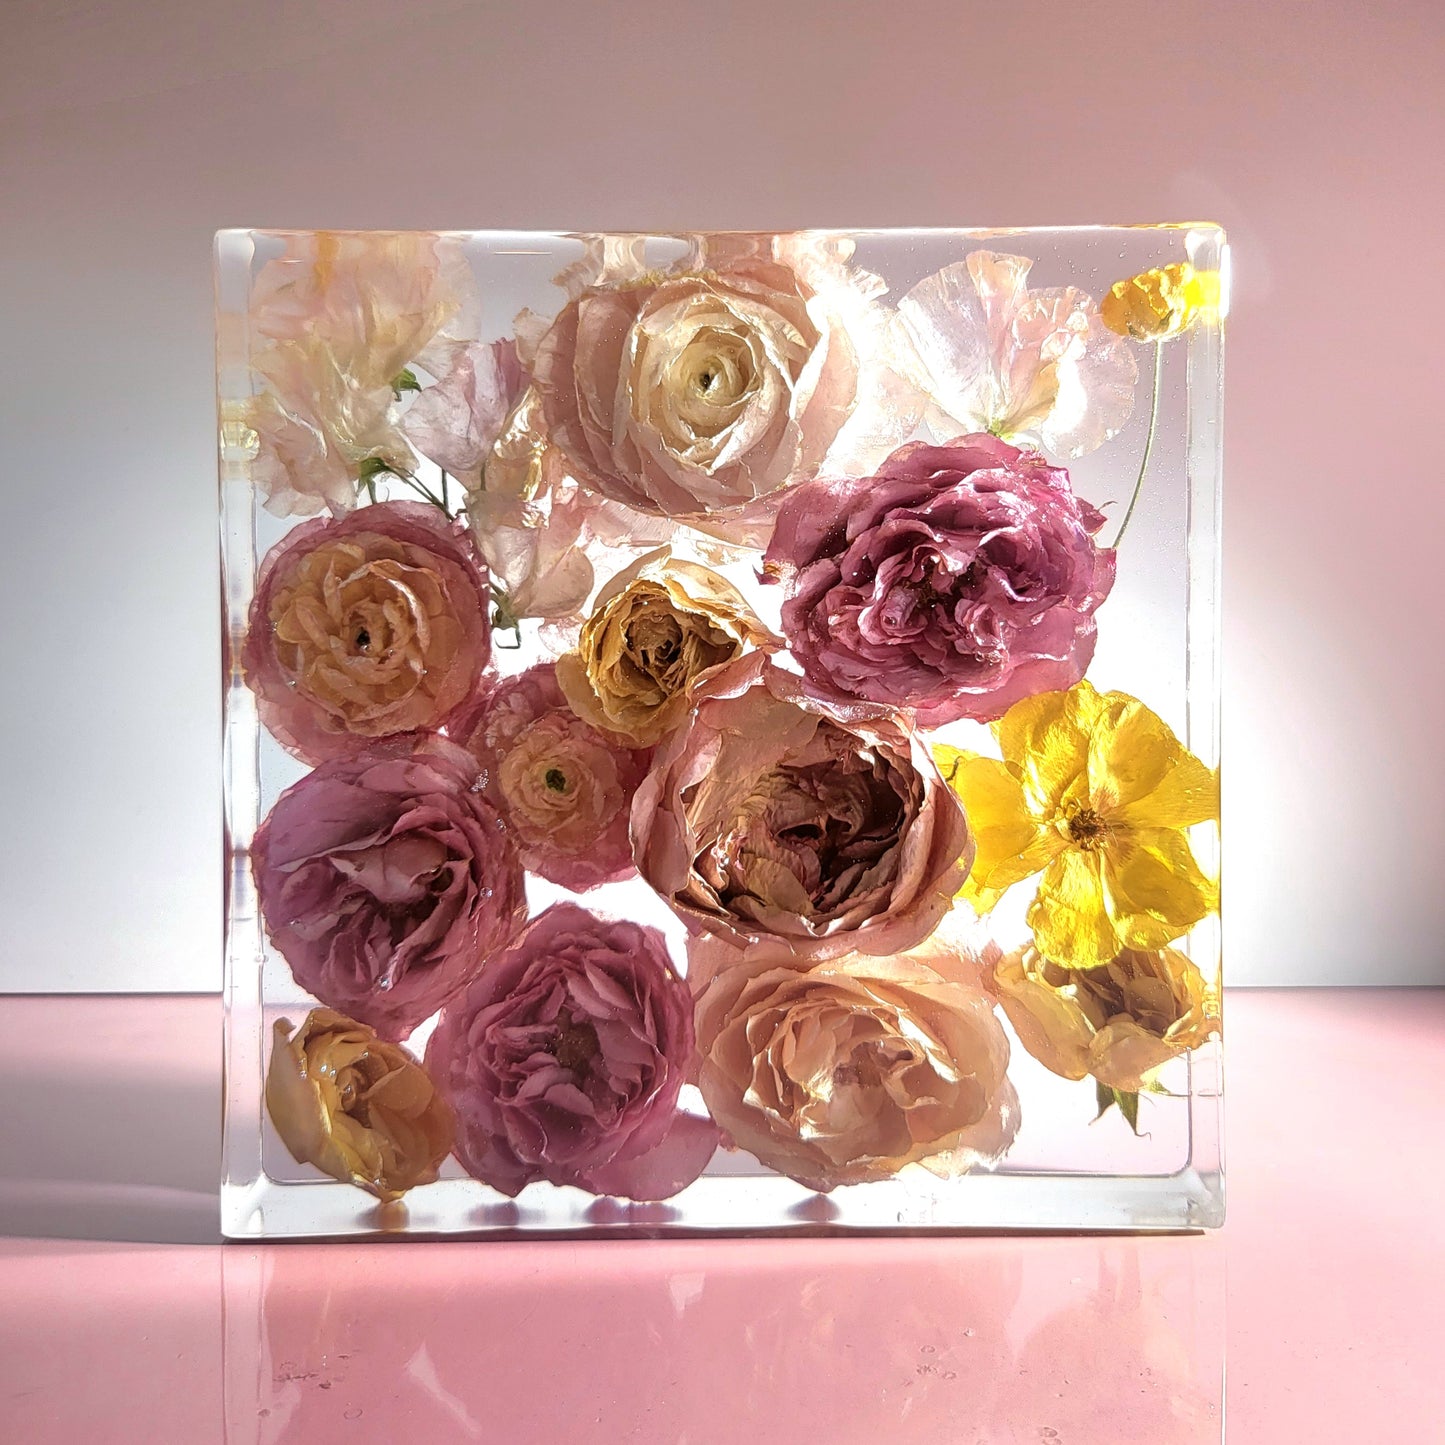 8"x 8" 3D Floral Resin Art Cube Wedding Bouquet Preservation Modern Fried Flowers Square Save Your Gift Keepsake - flofloflowery